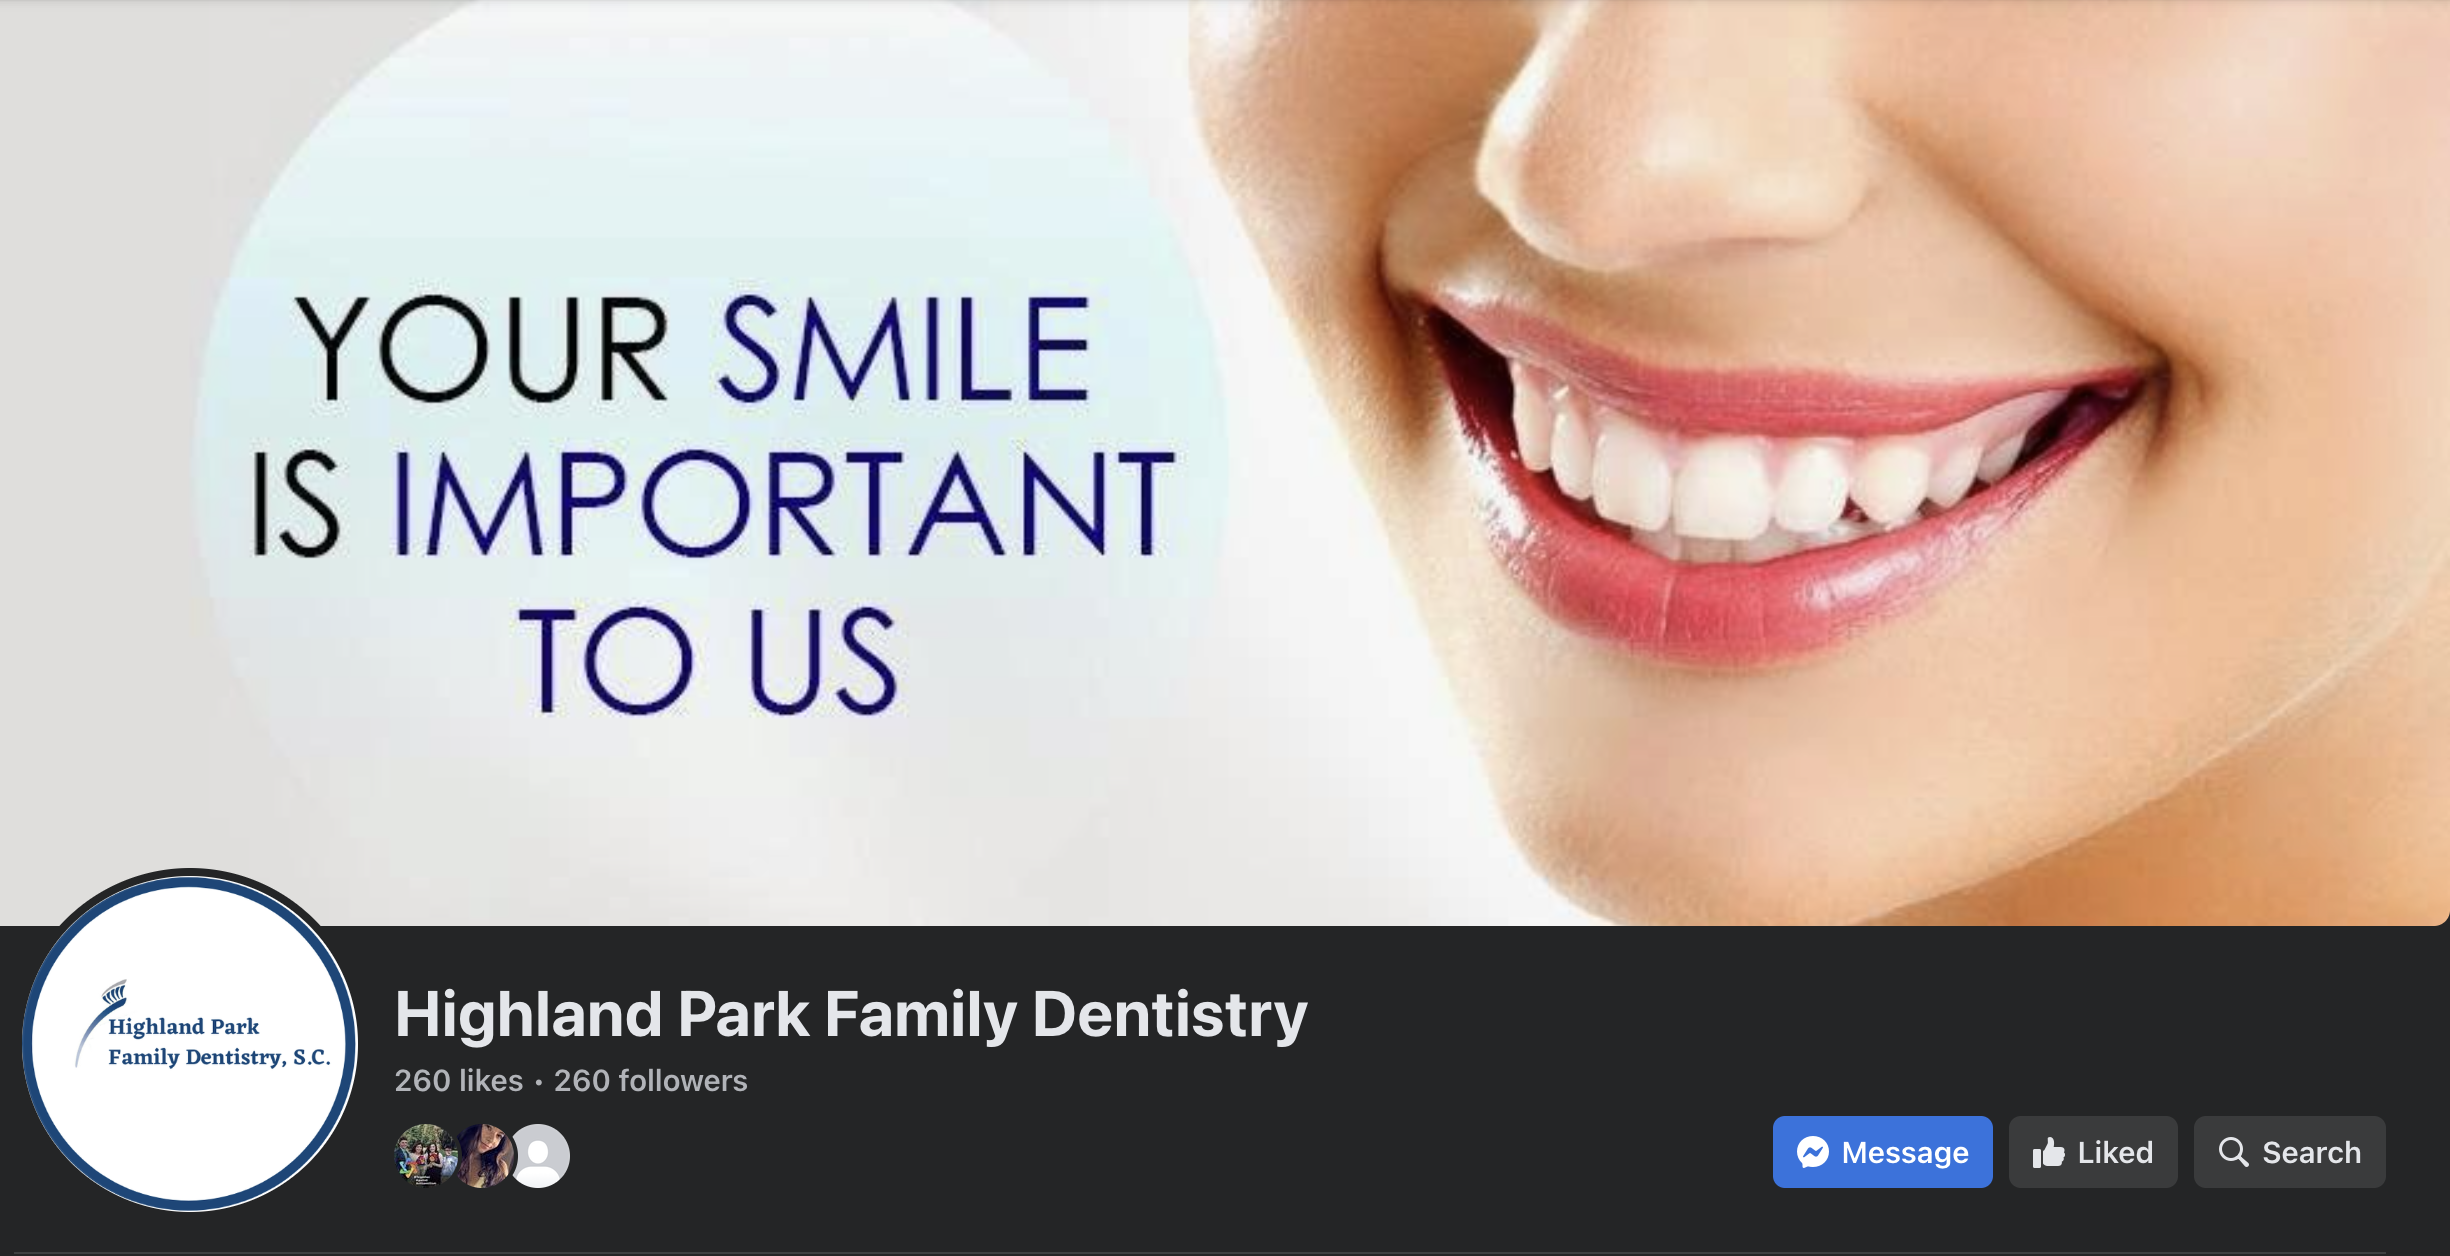 Follow Highland Park Family Dentistry on Facebook